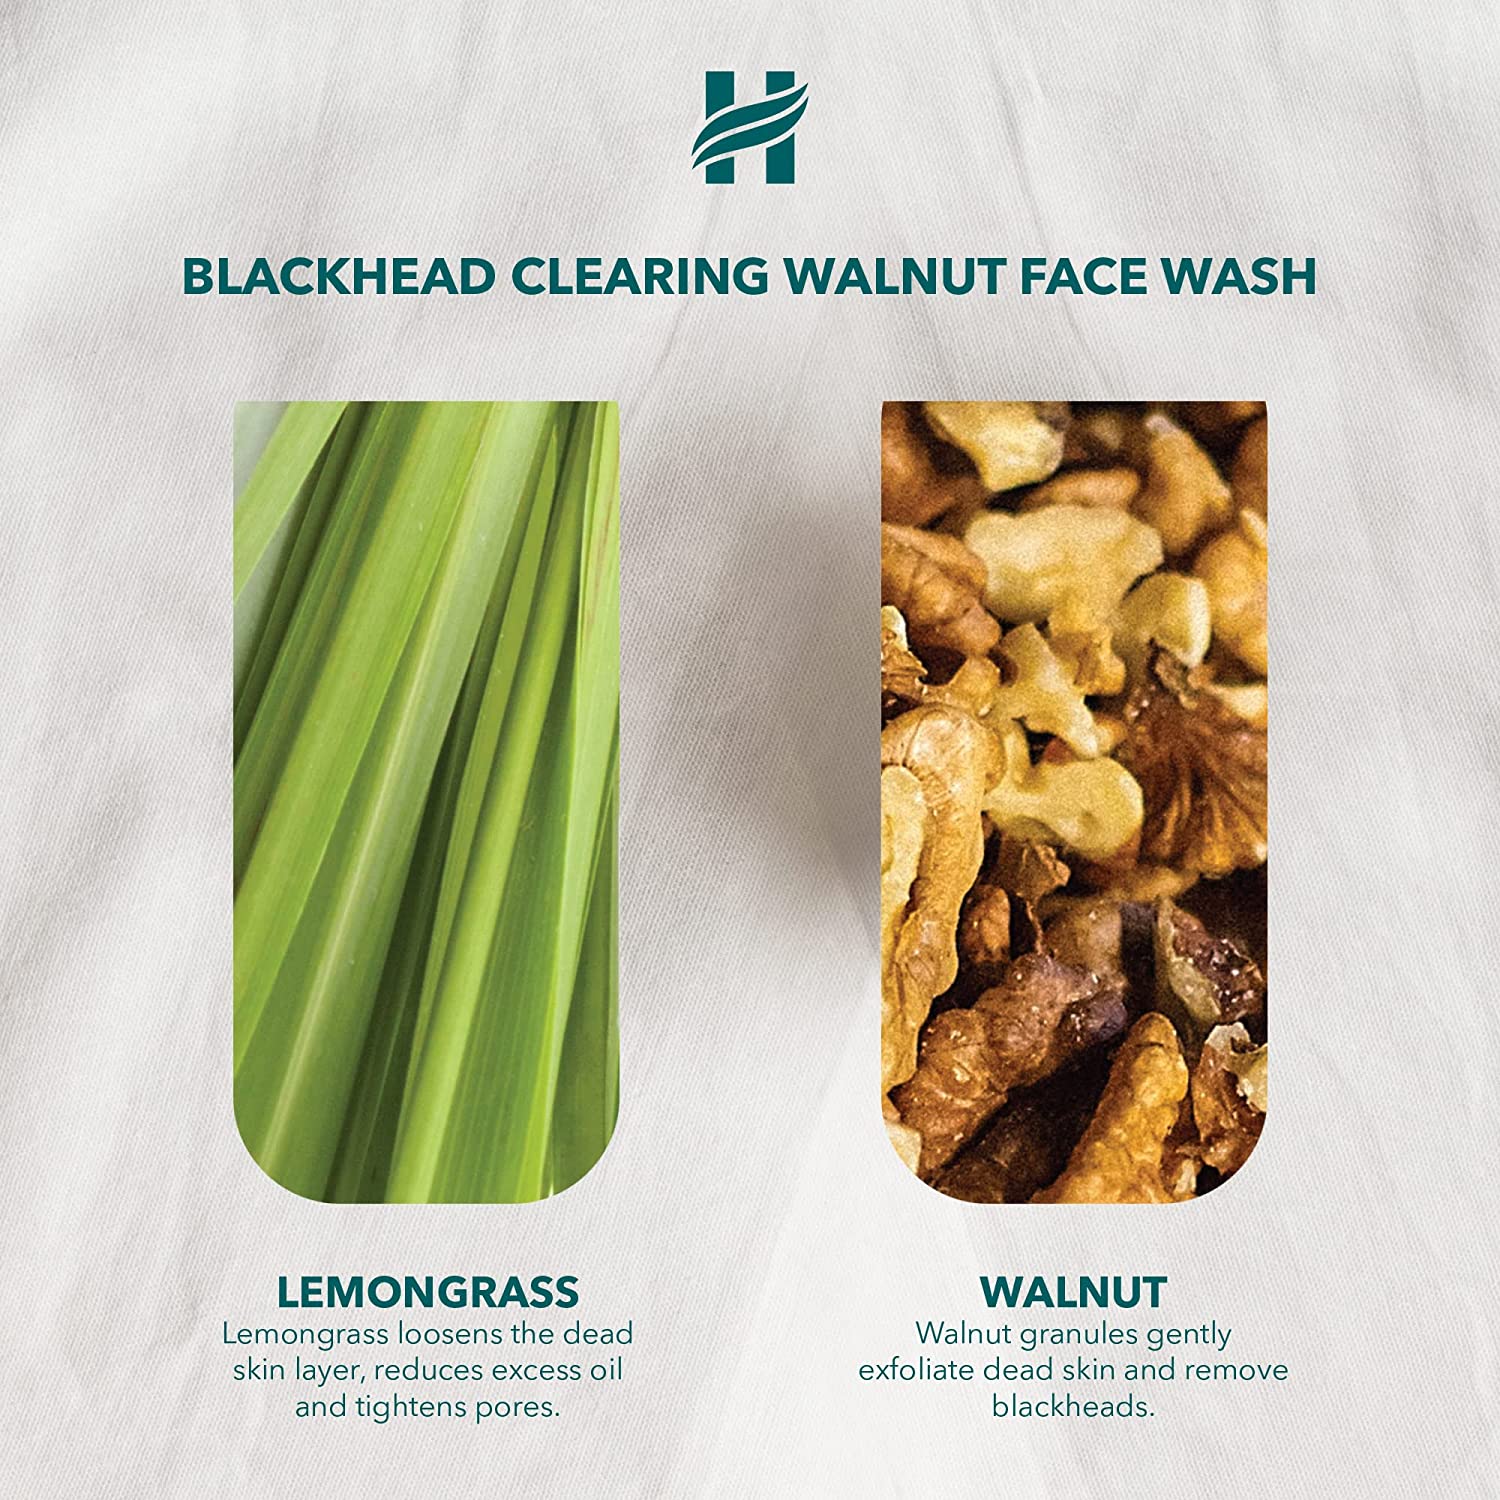 Himalaya Blackhead Clearing Walnut Face Wash - 150 ml